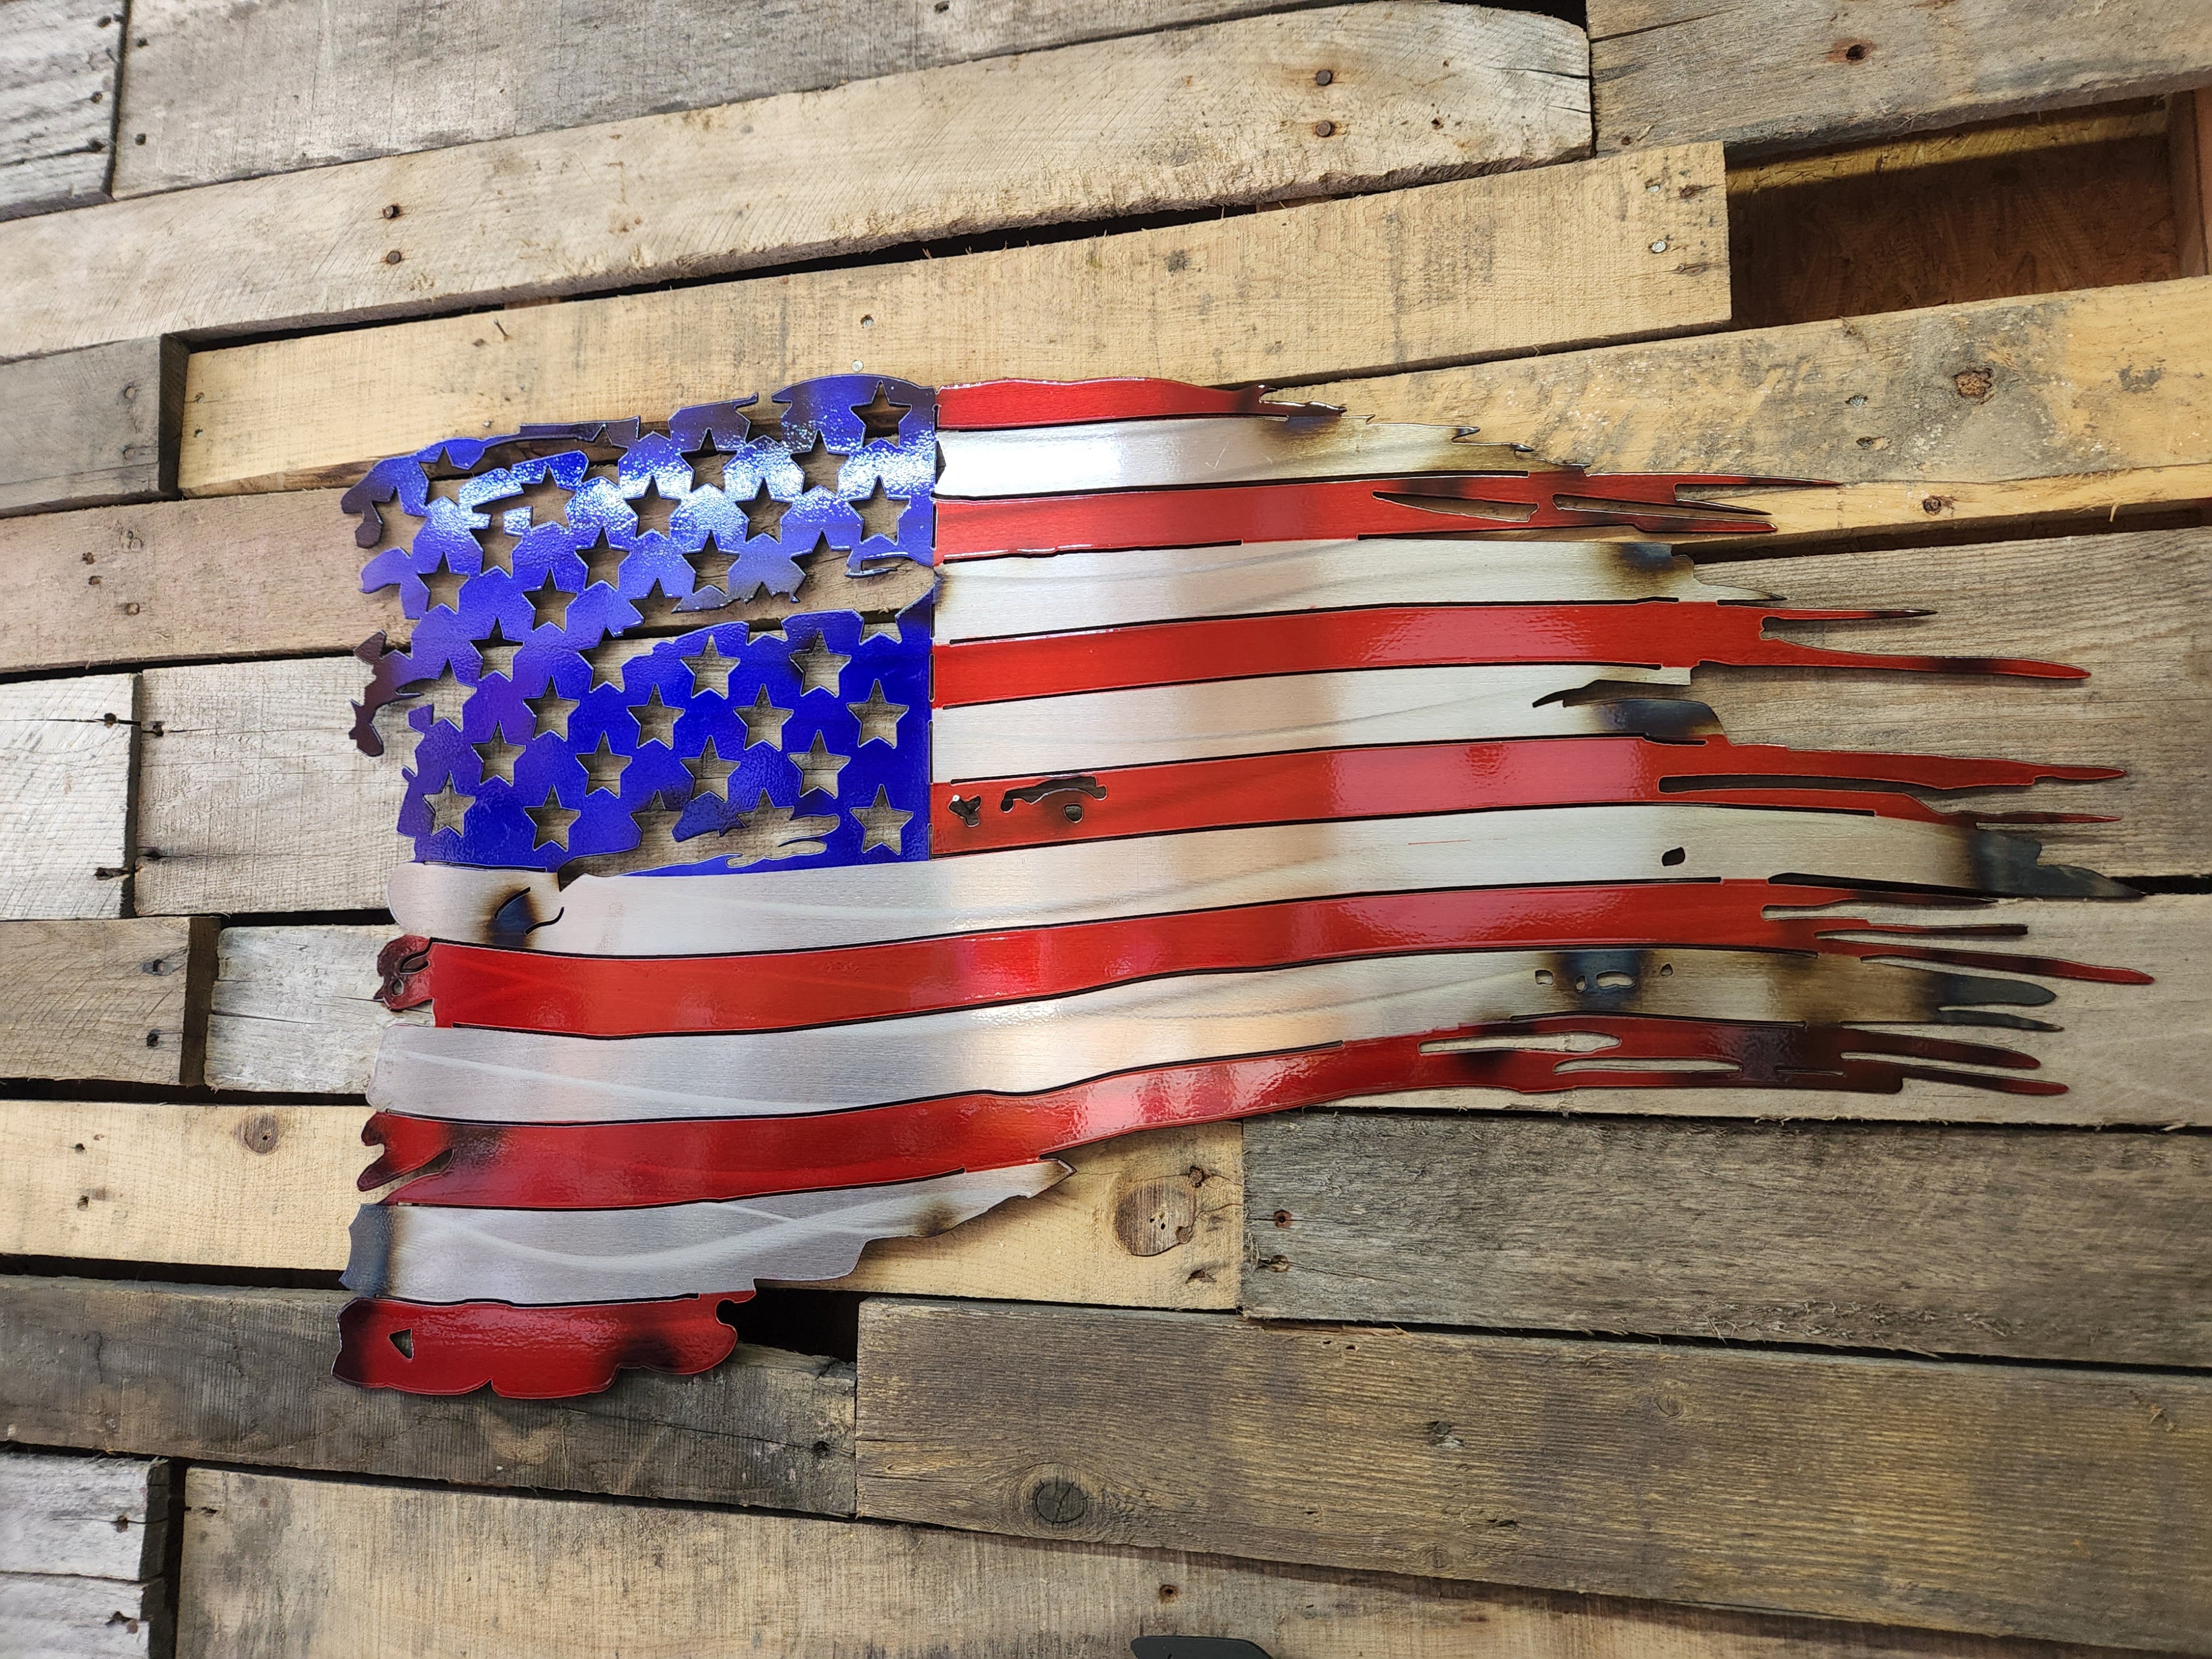 Tattered, Distressed, Battle worn American Flag